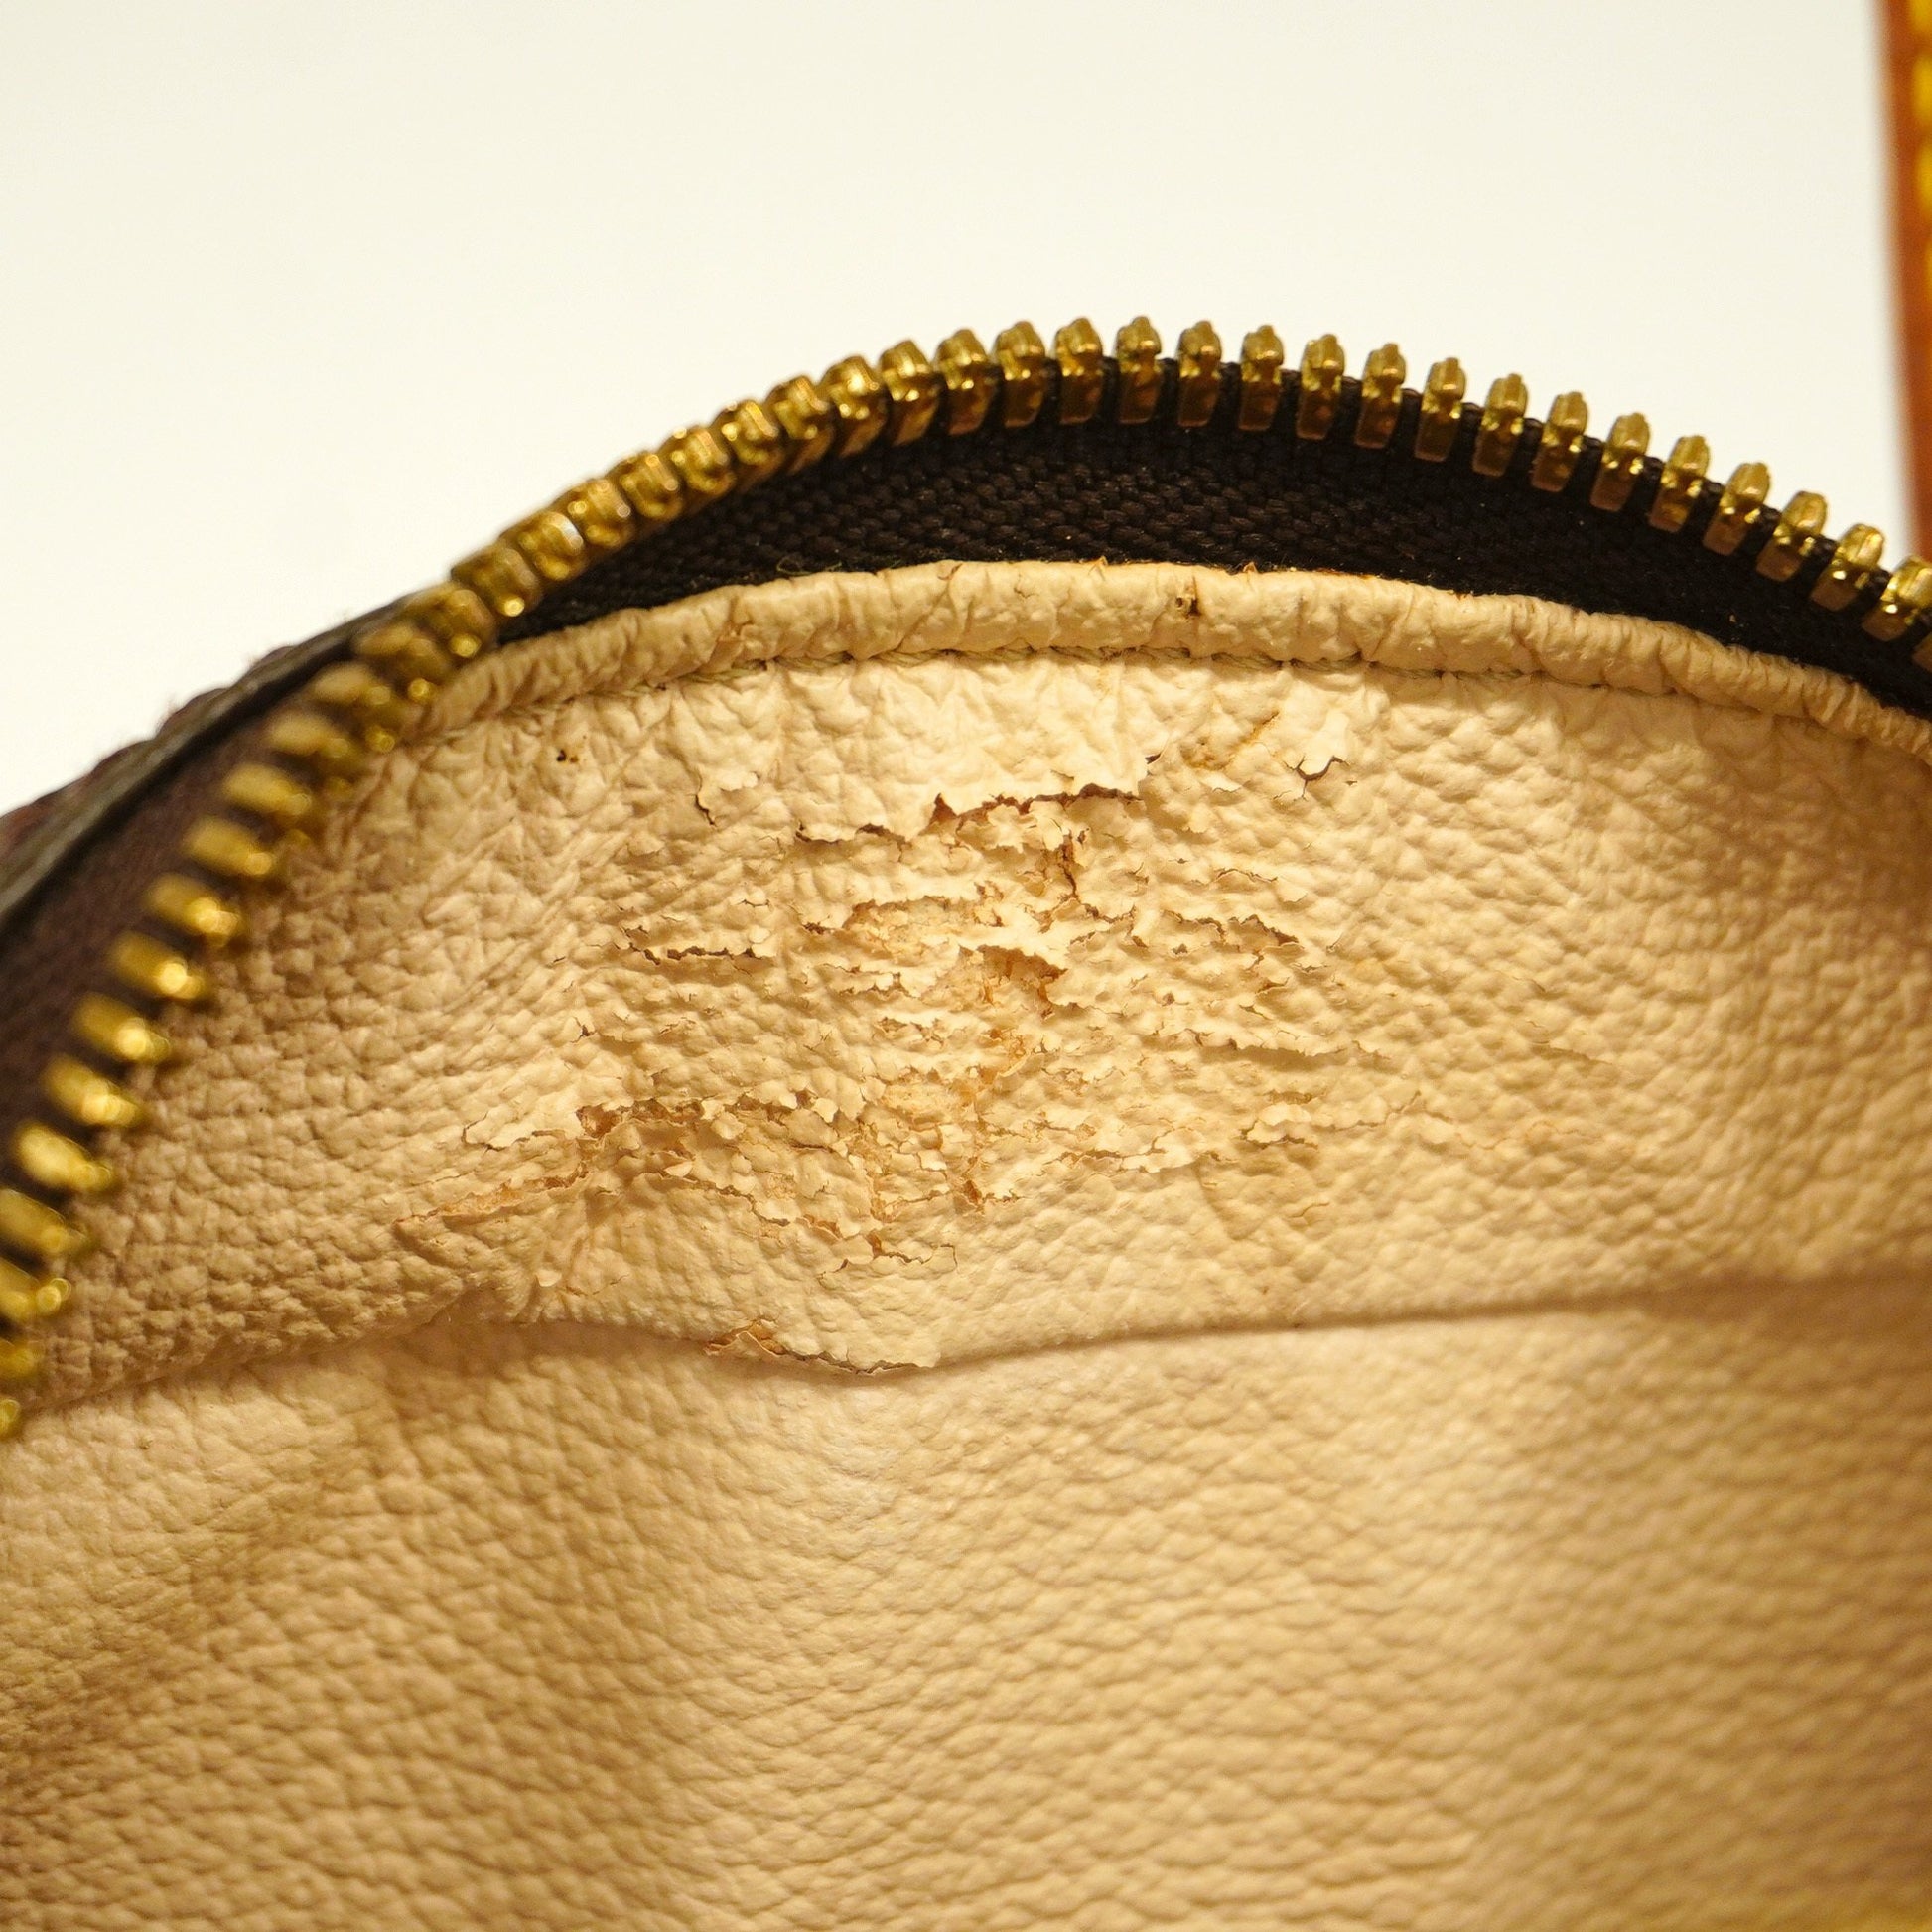 LOUIS VUITTONAuth Monogram 2way Bag Spontini M47500 Women's Handbag,Sh